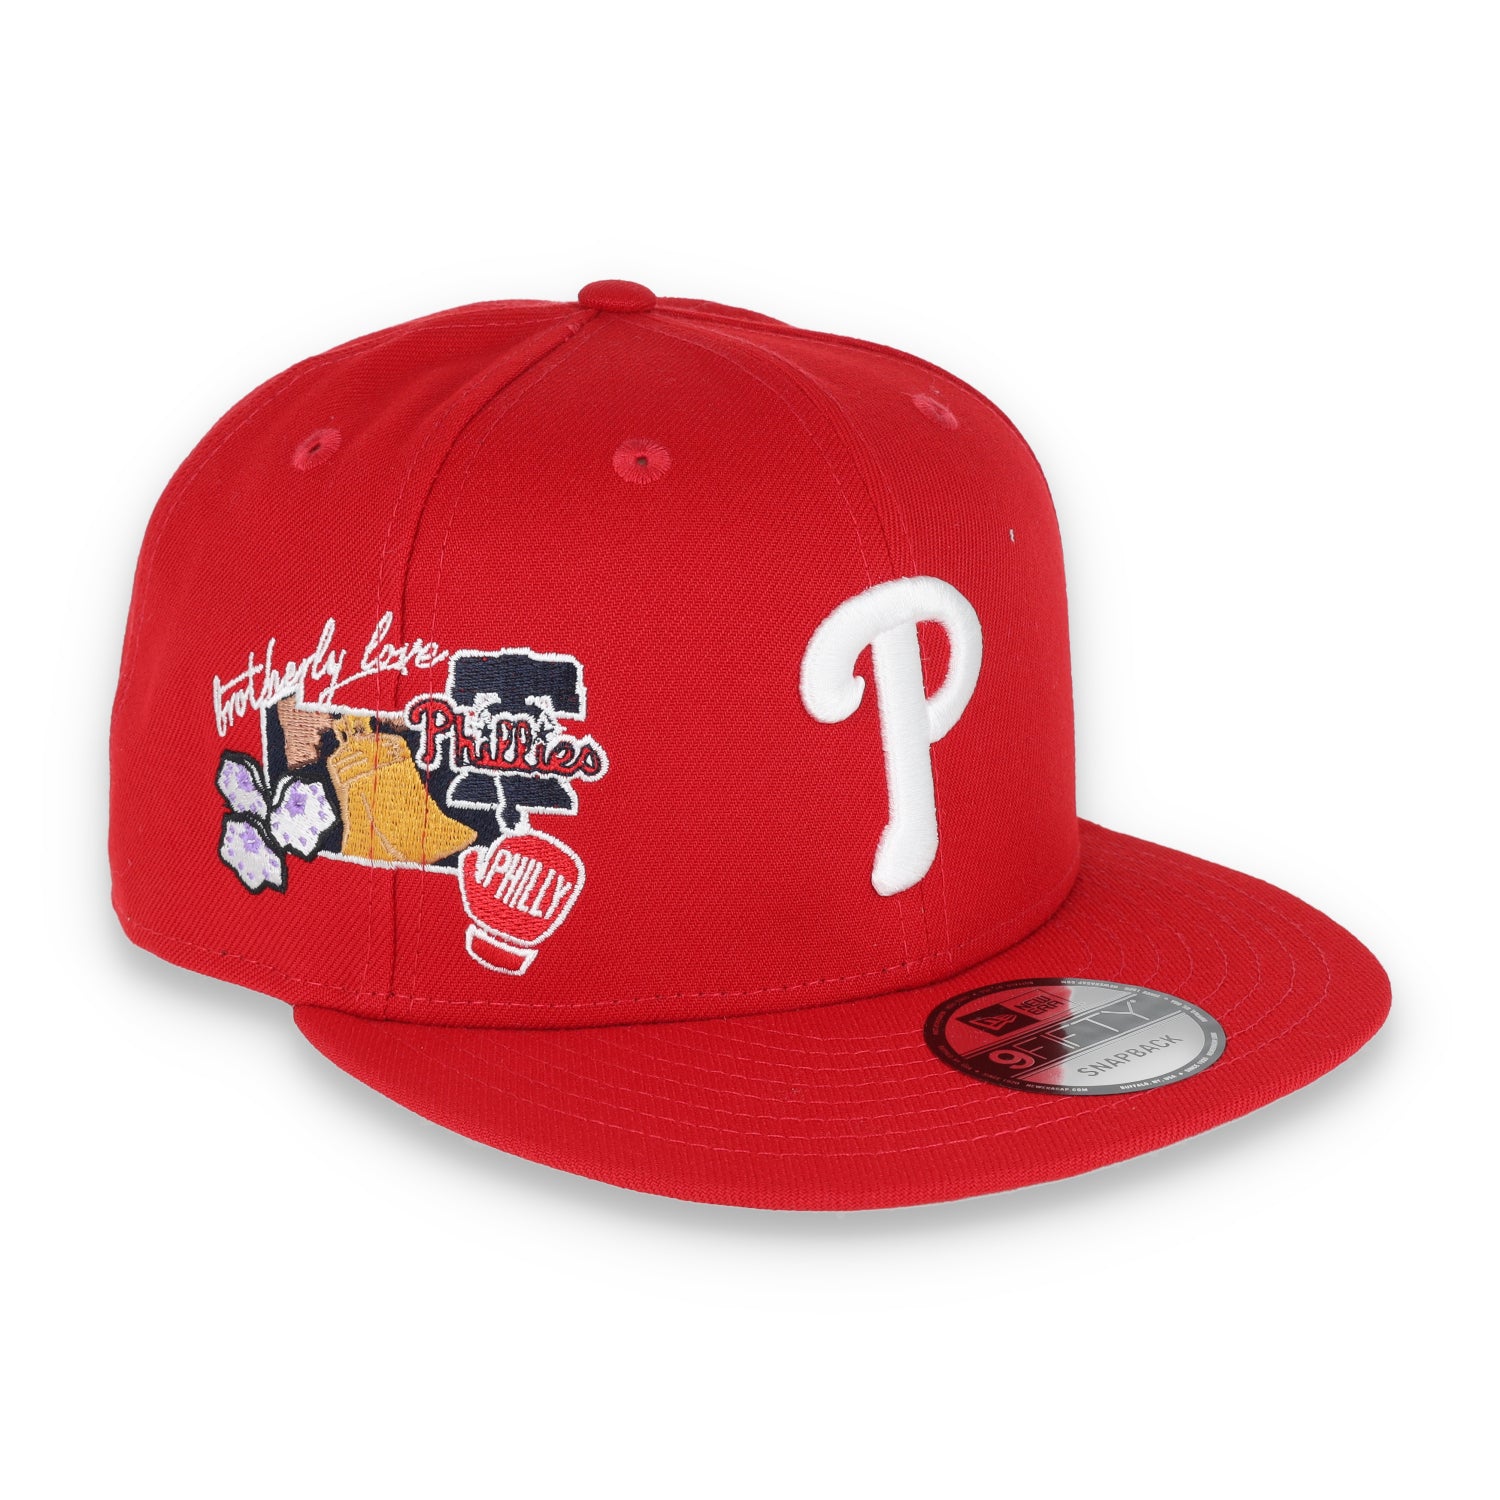 New Era Philadelphia Phillies Icon E1 9Fifty Snapback Hat-Red